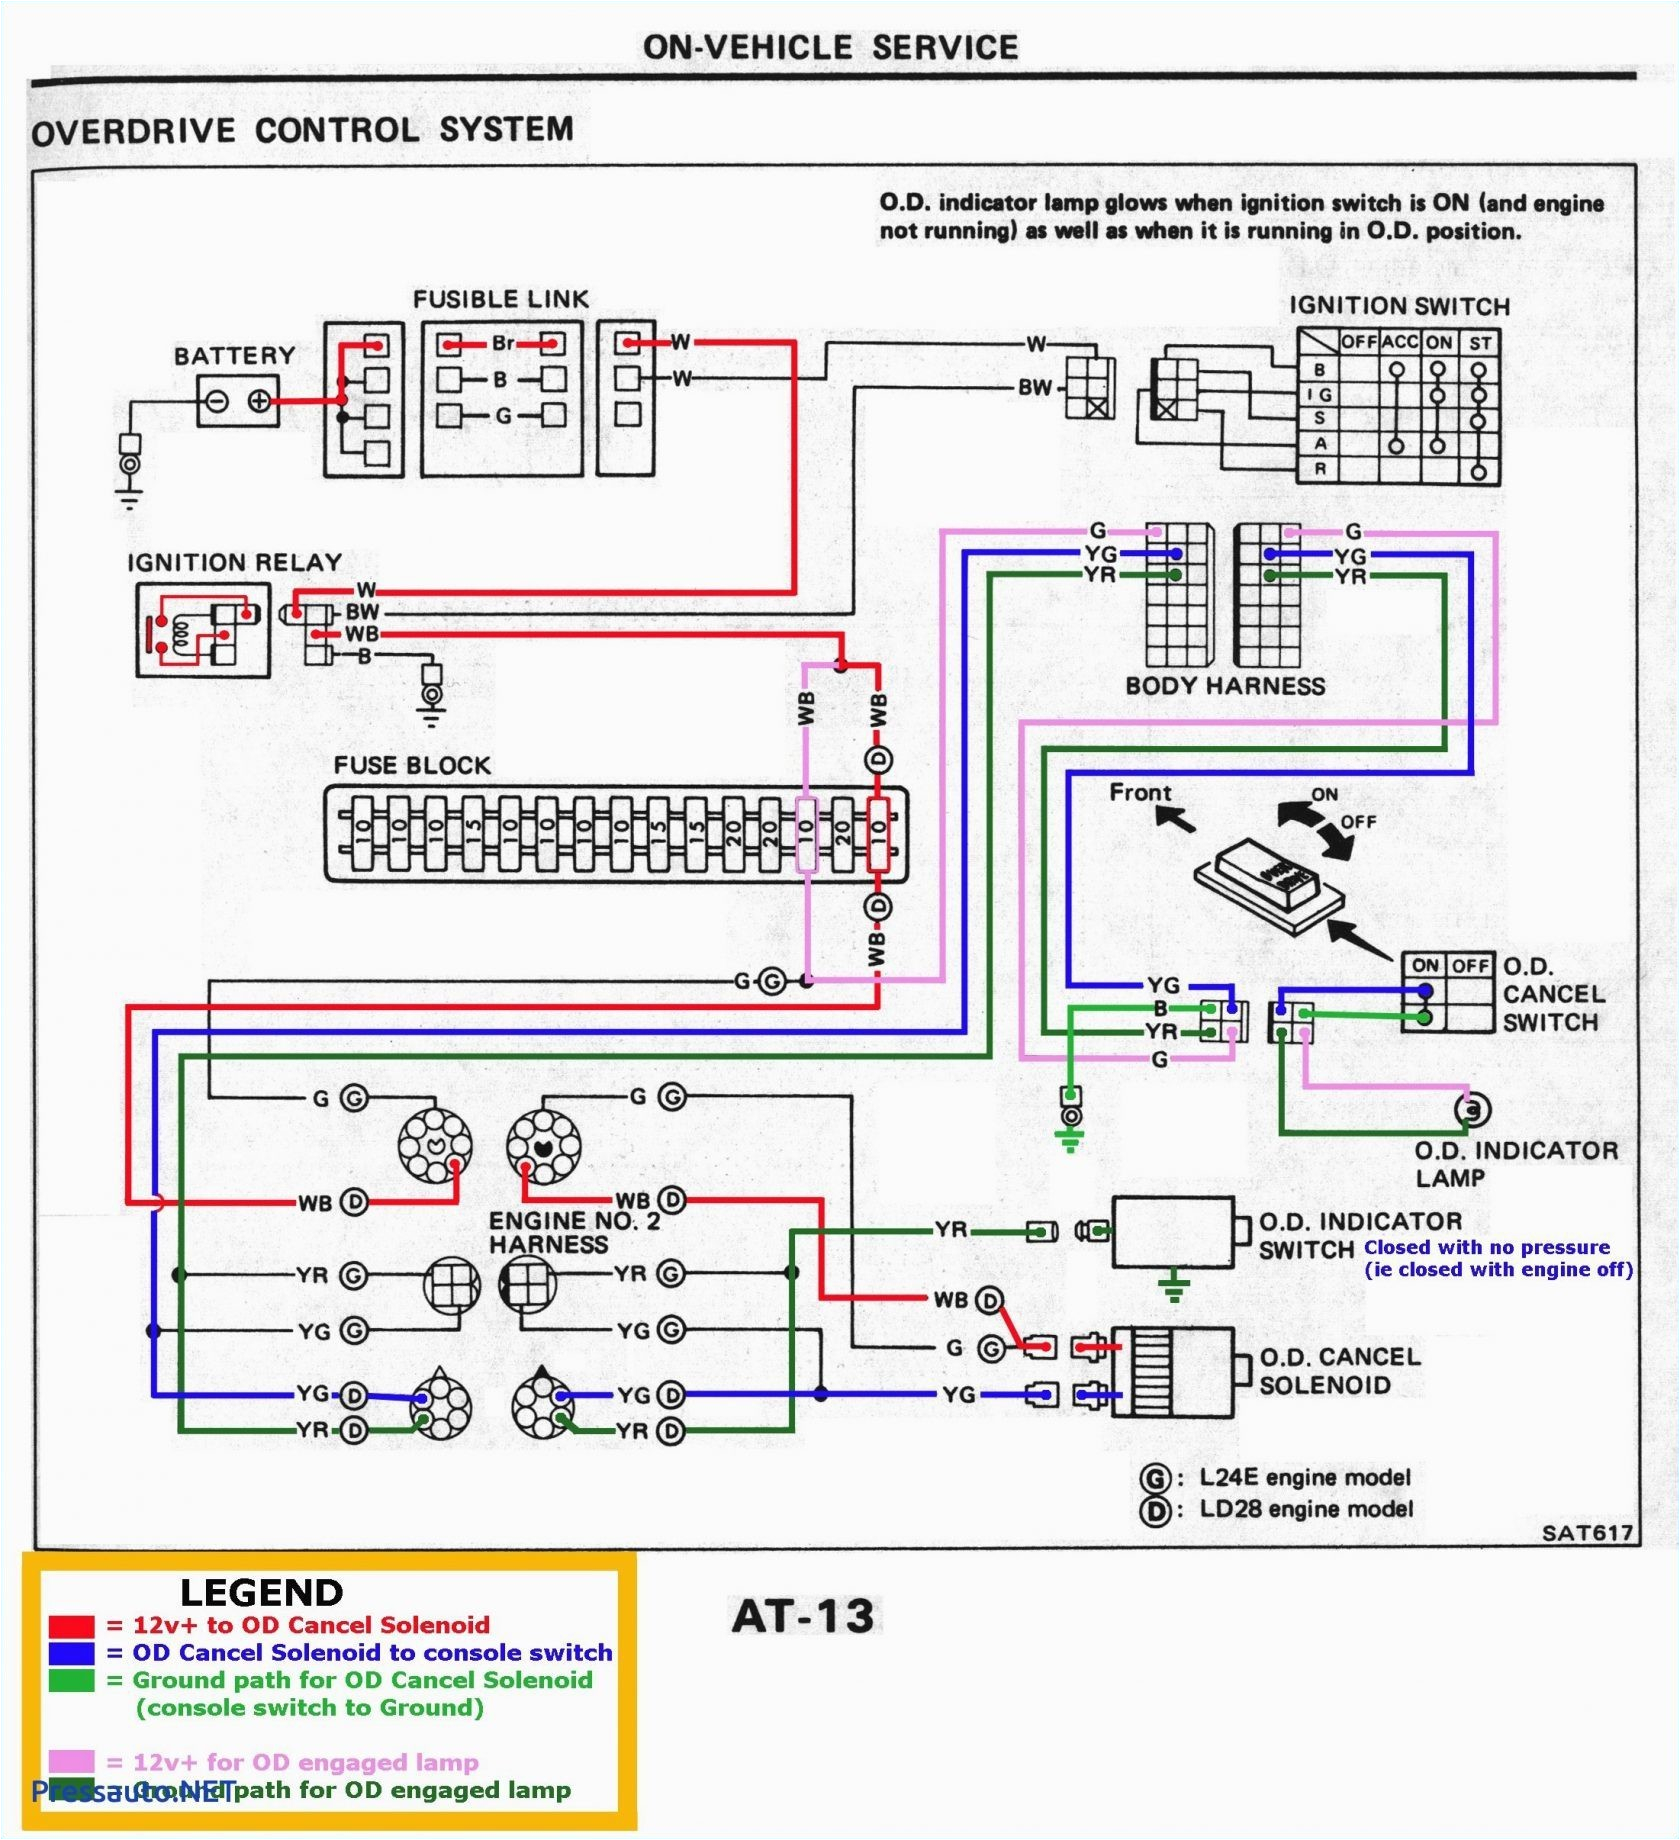 toyota unser wiring diagram wiring diagrams for toyota unser power window wiring diagram toyota unser wiring diagram